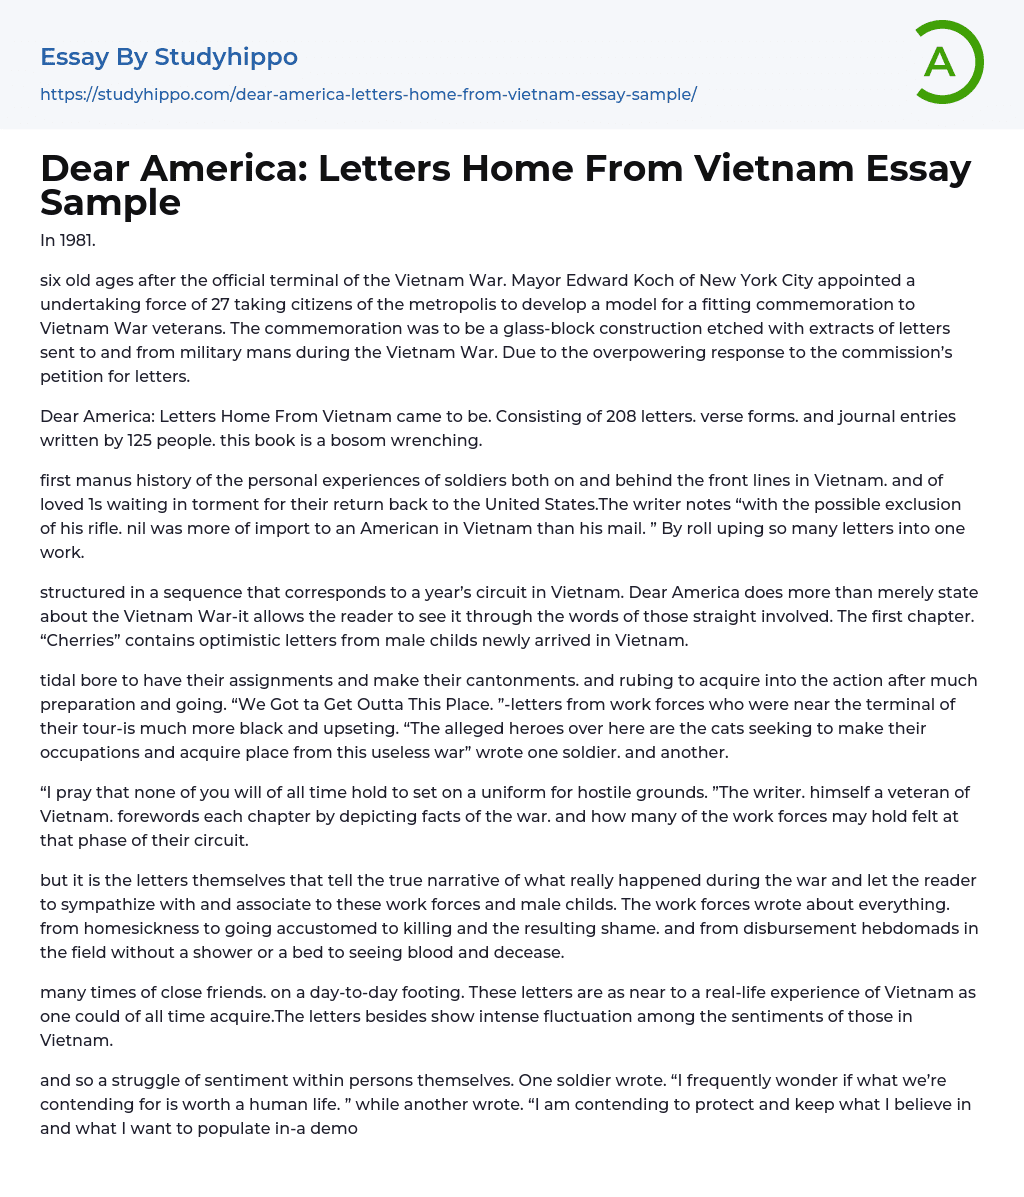 Dear America: Letters Home From Vietnam Essay Sample StudyHippo com